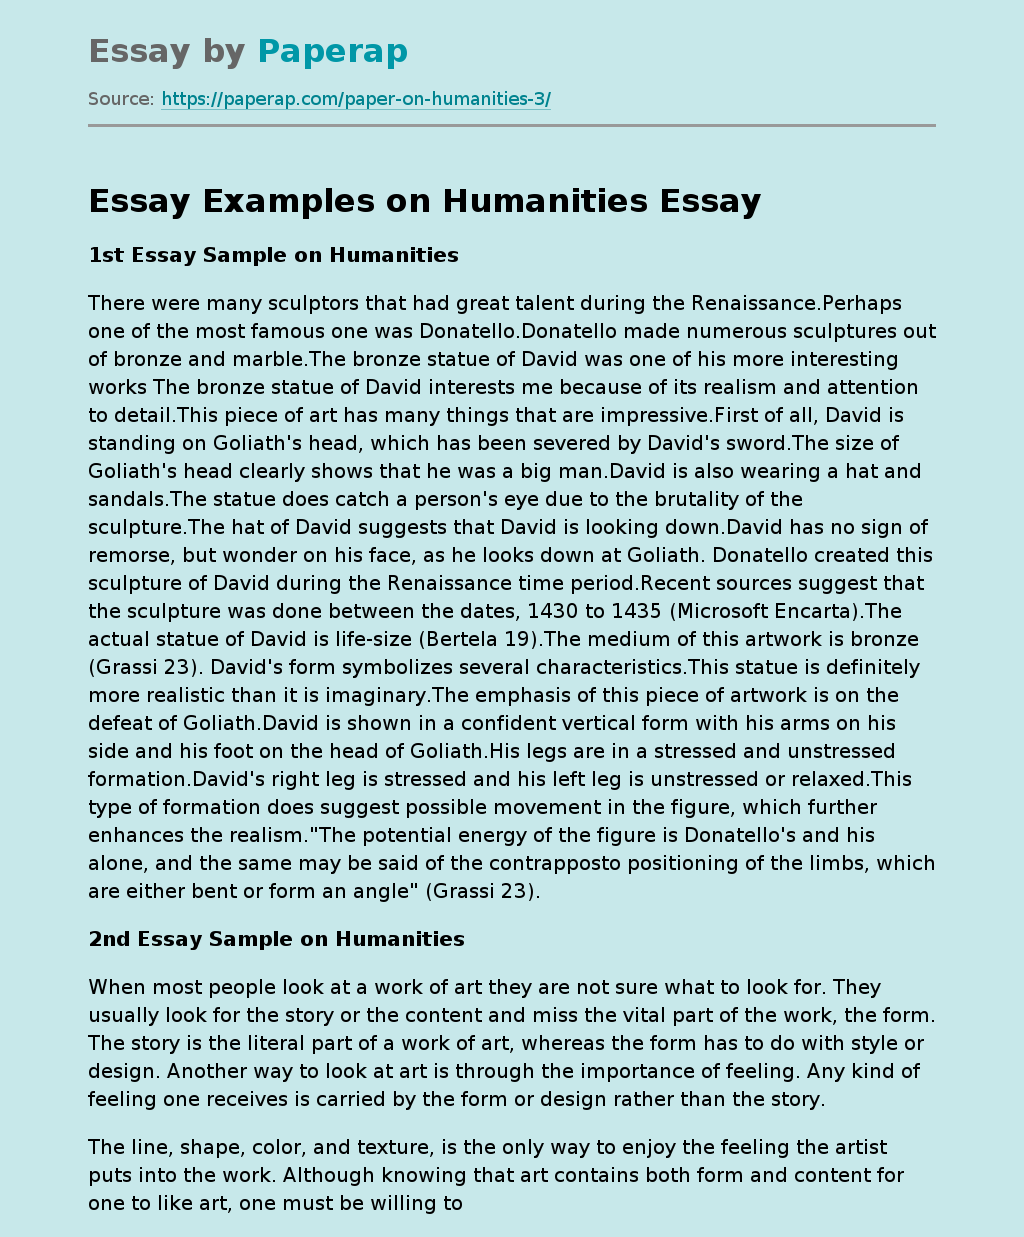 humanities essay definition